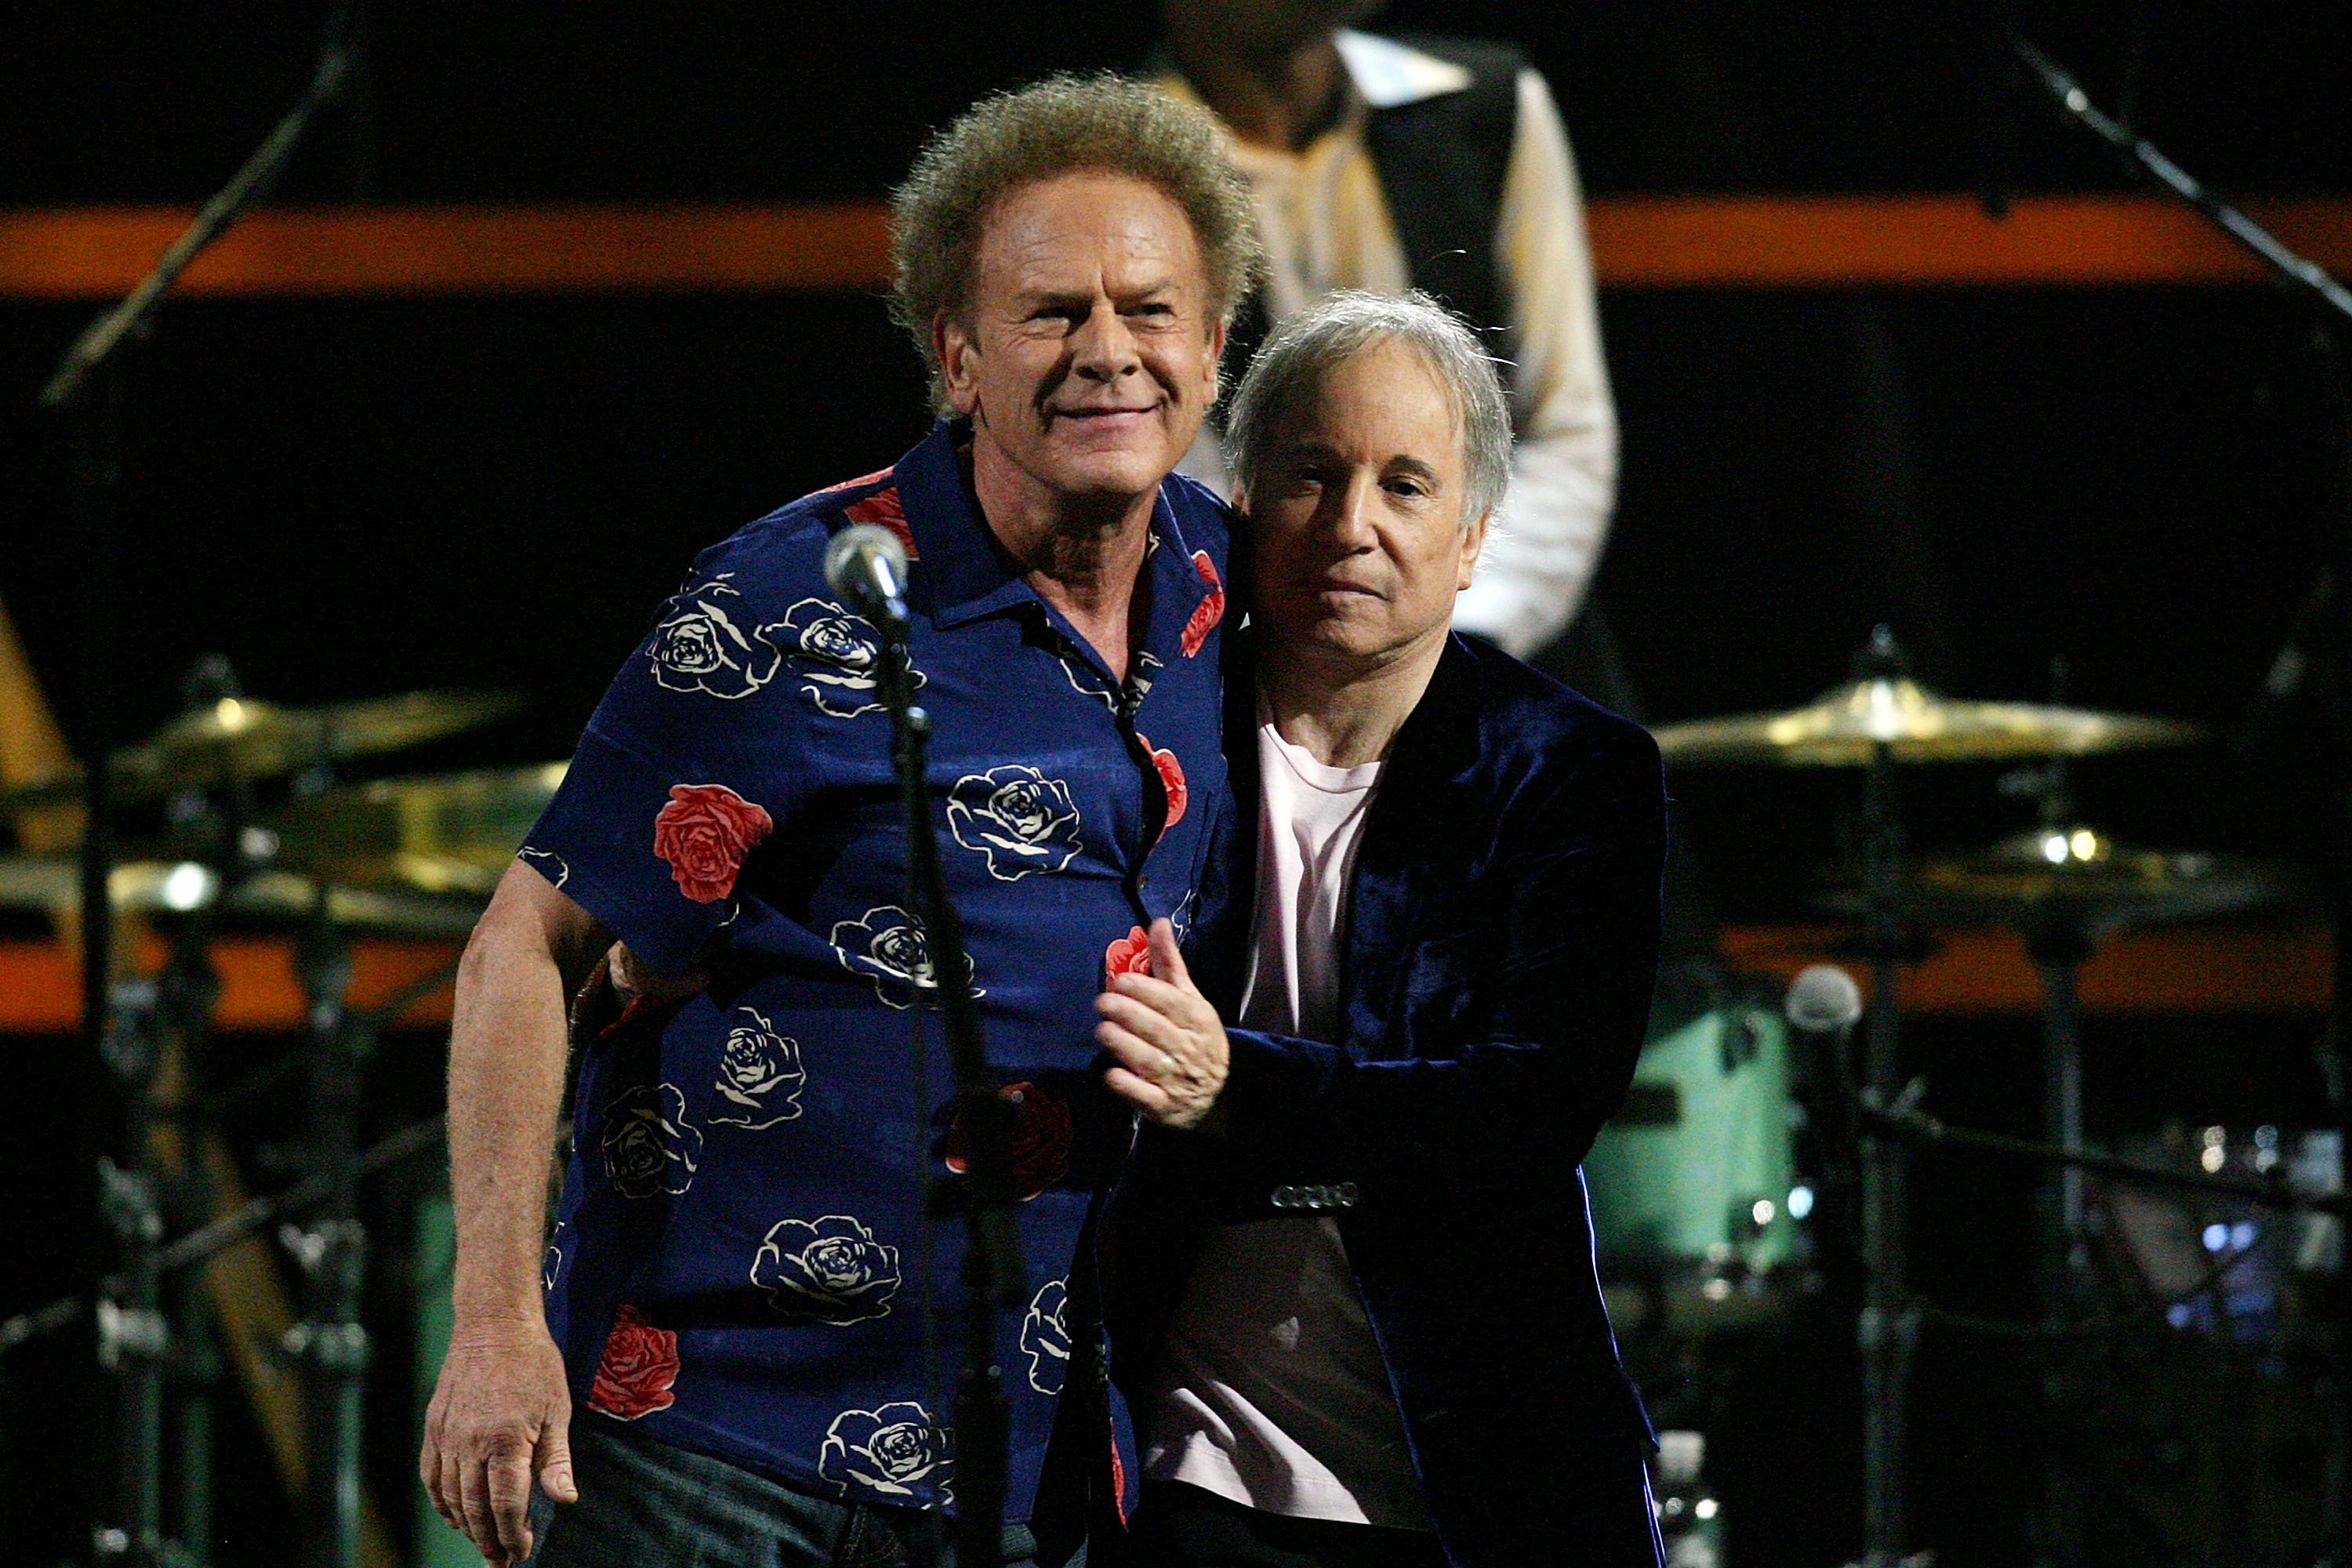 Paul Simon and Art Garfunkel  in New York in 2009. | Source: Getty Images 